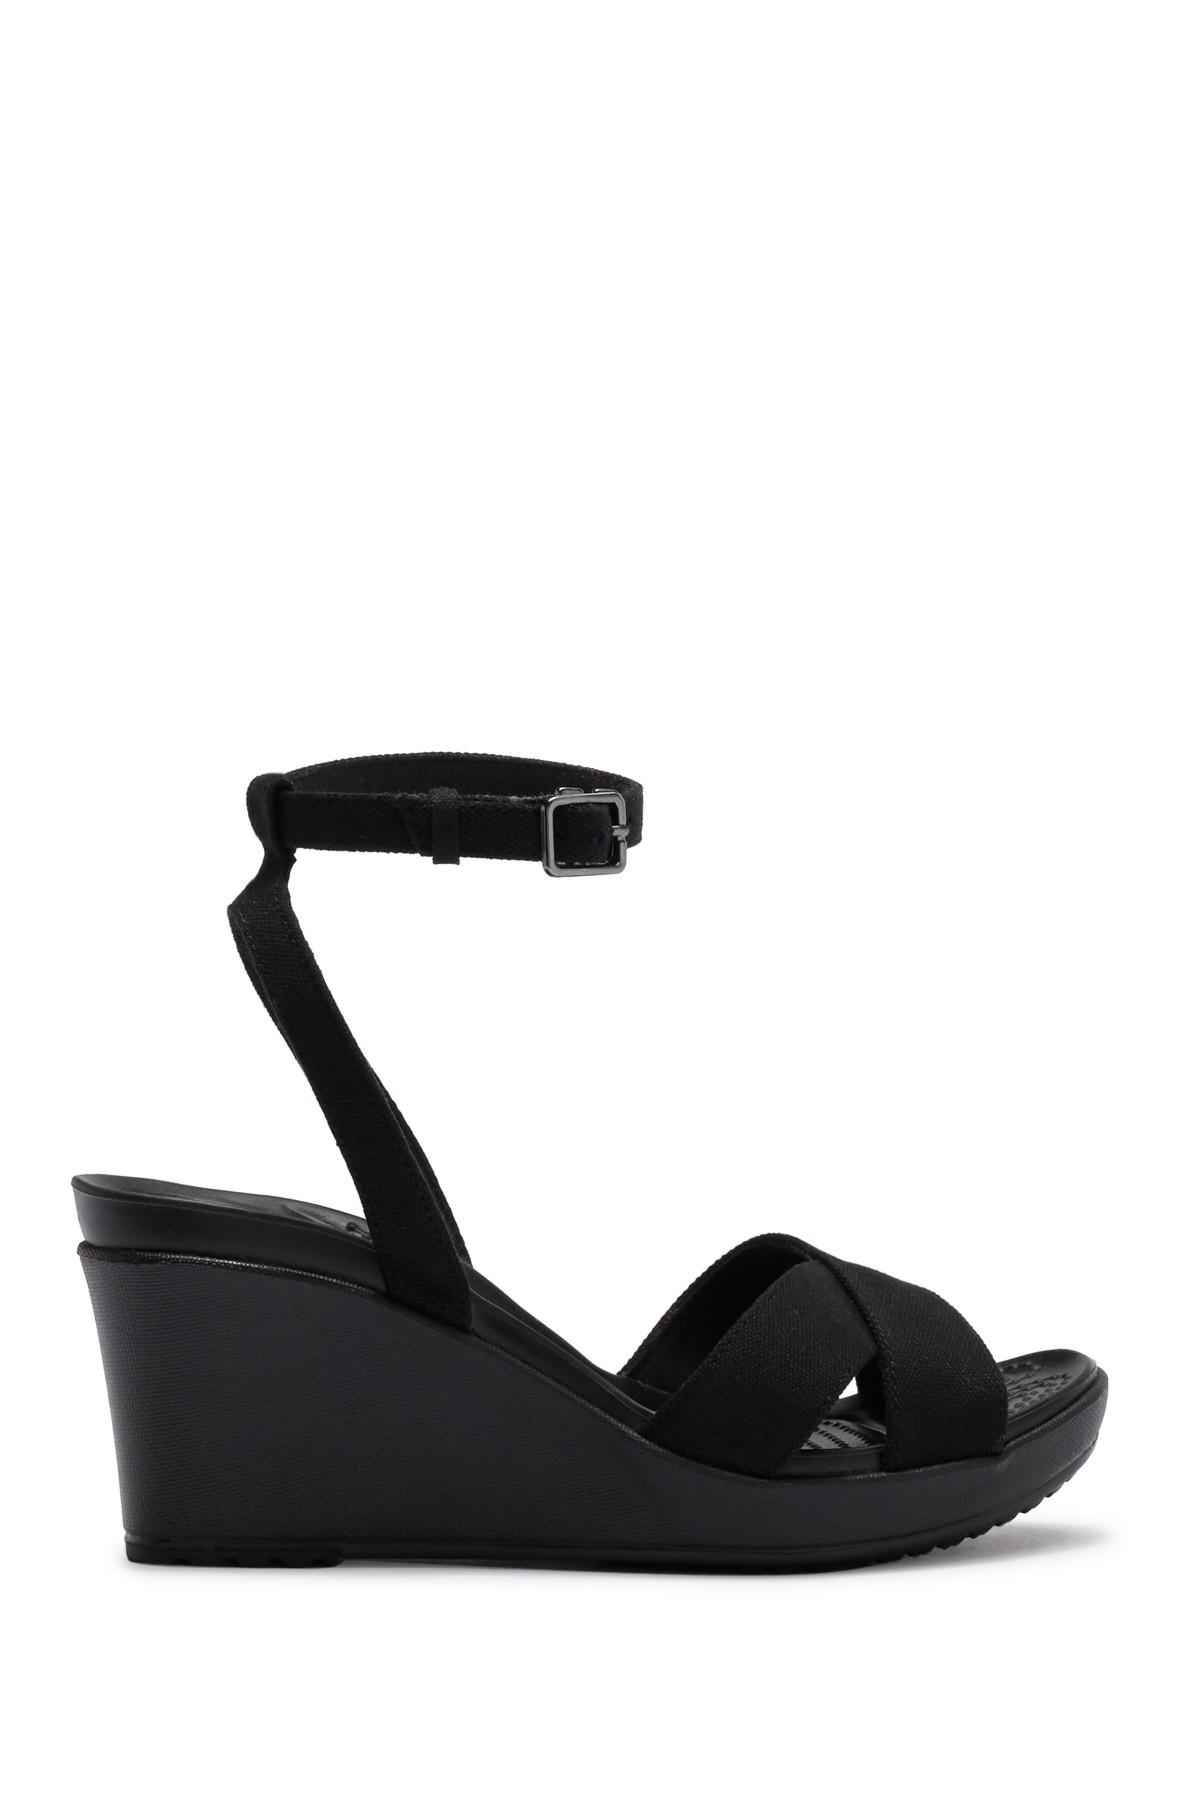 Crocs™ Canvas Women's Leigh Ii Cross-strap Ankle Wedge in Black/Black  (Black) - Save 76% | Lyst